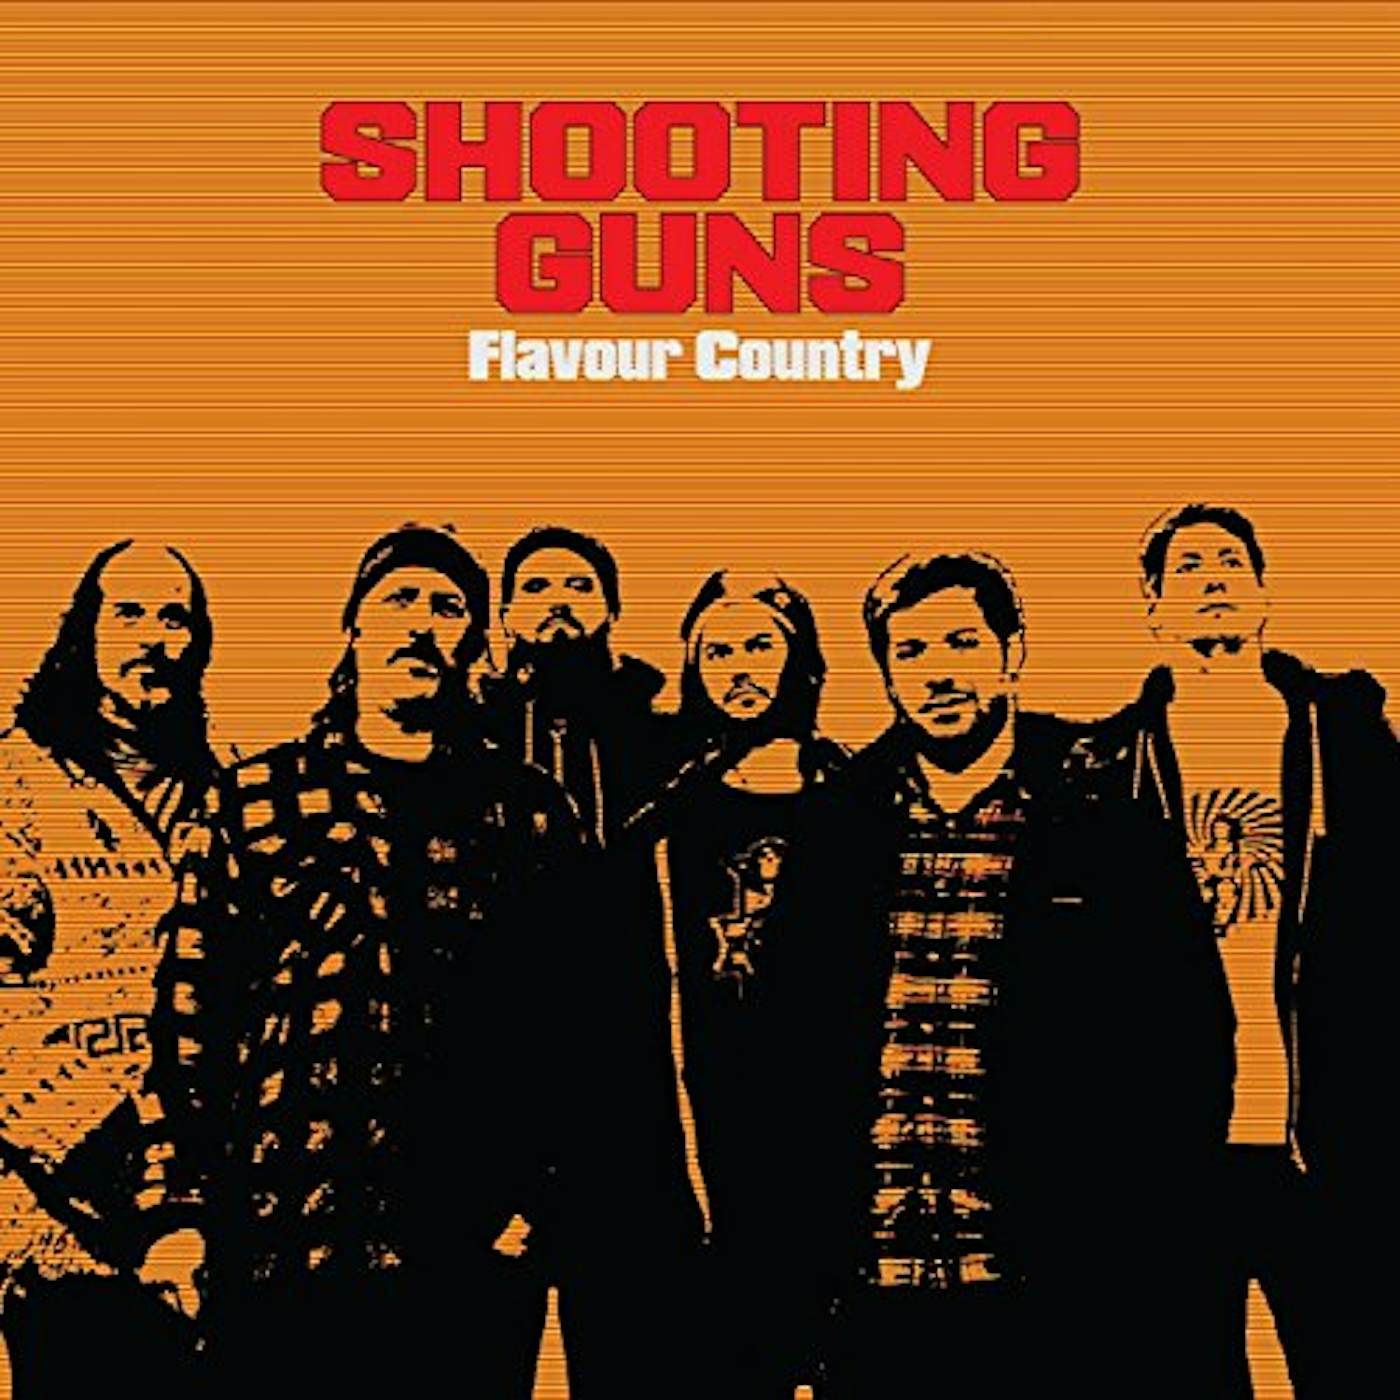 Shooting Guns Flavour Country Vinyl Record